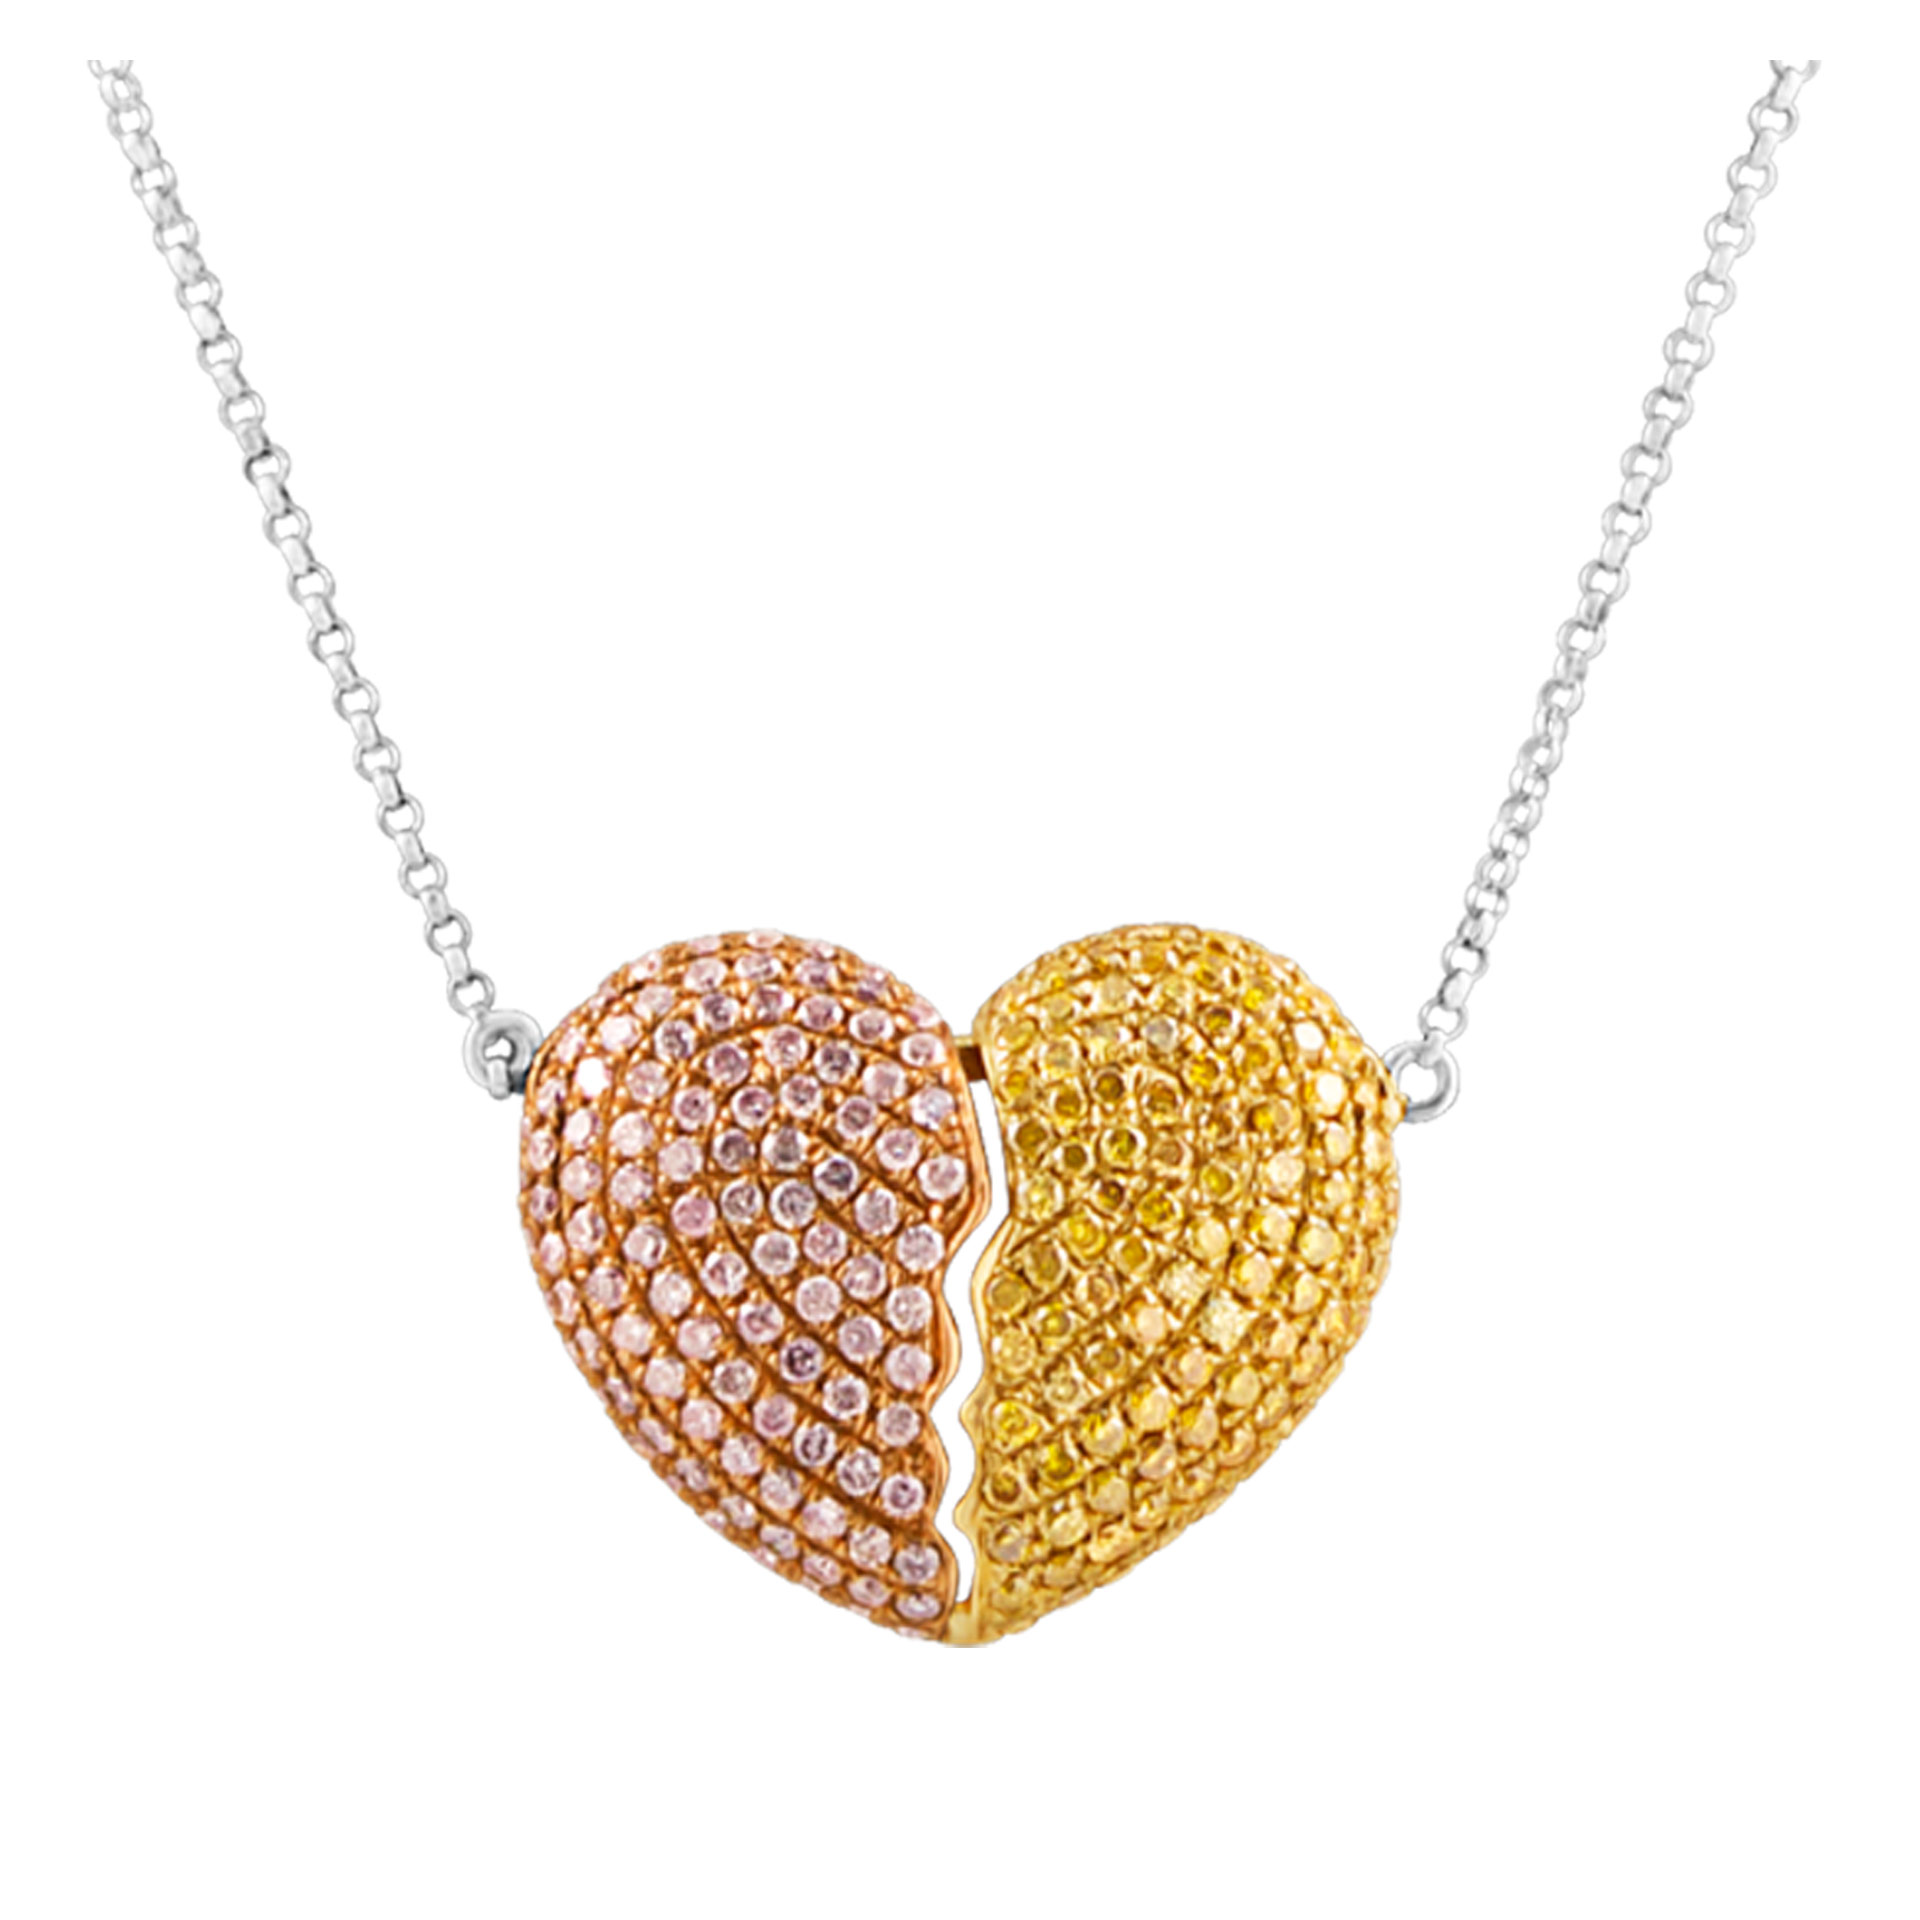 Heart shaped diamond pendant necklace image 1